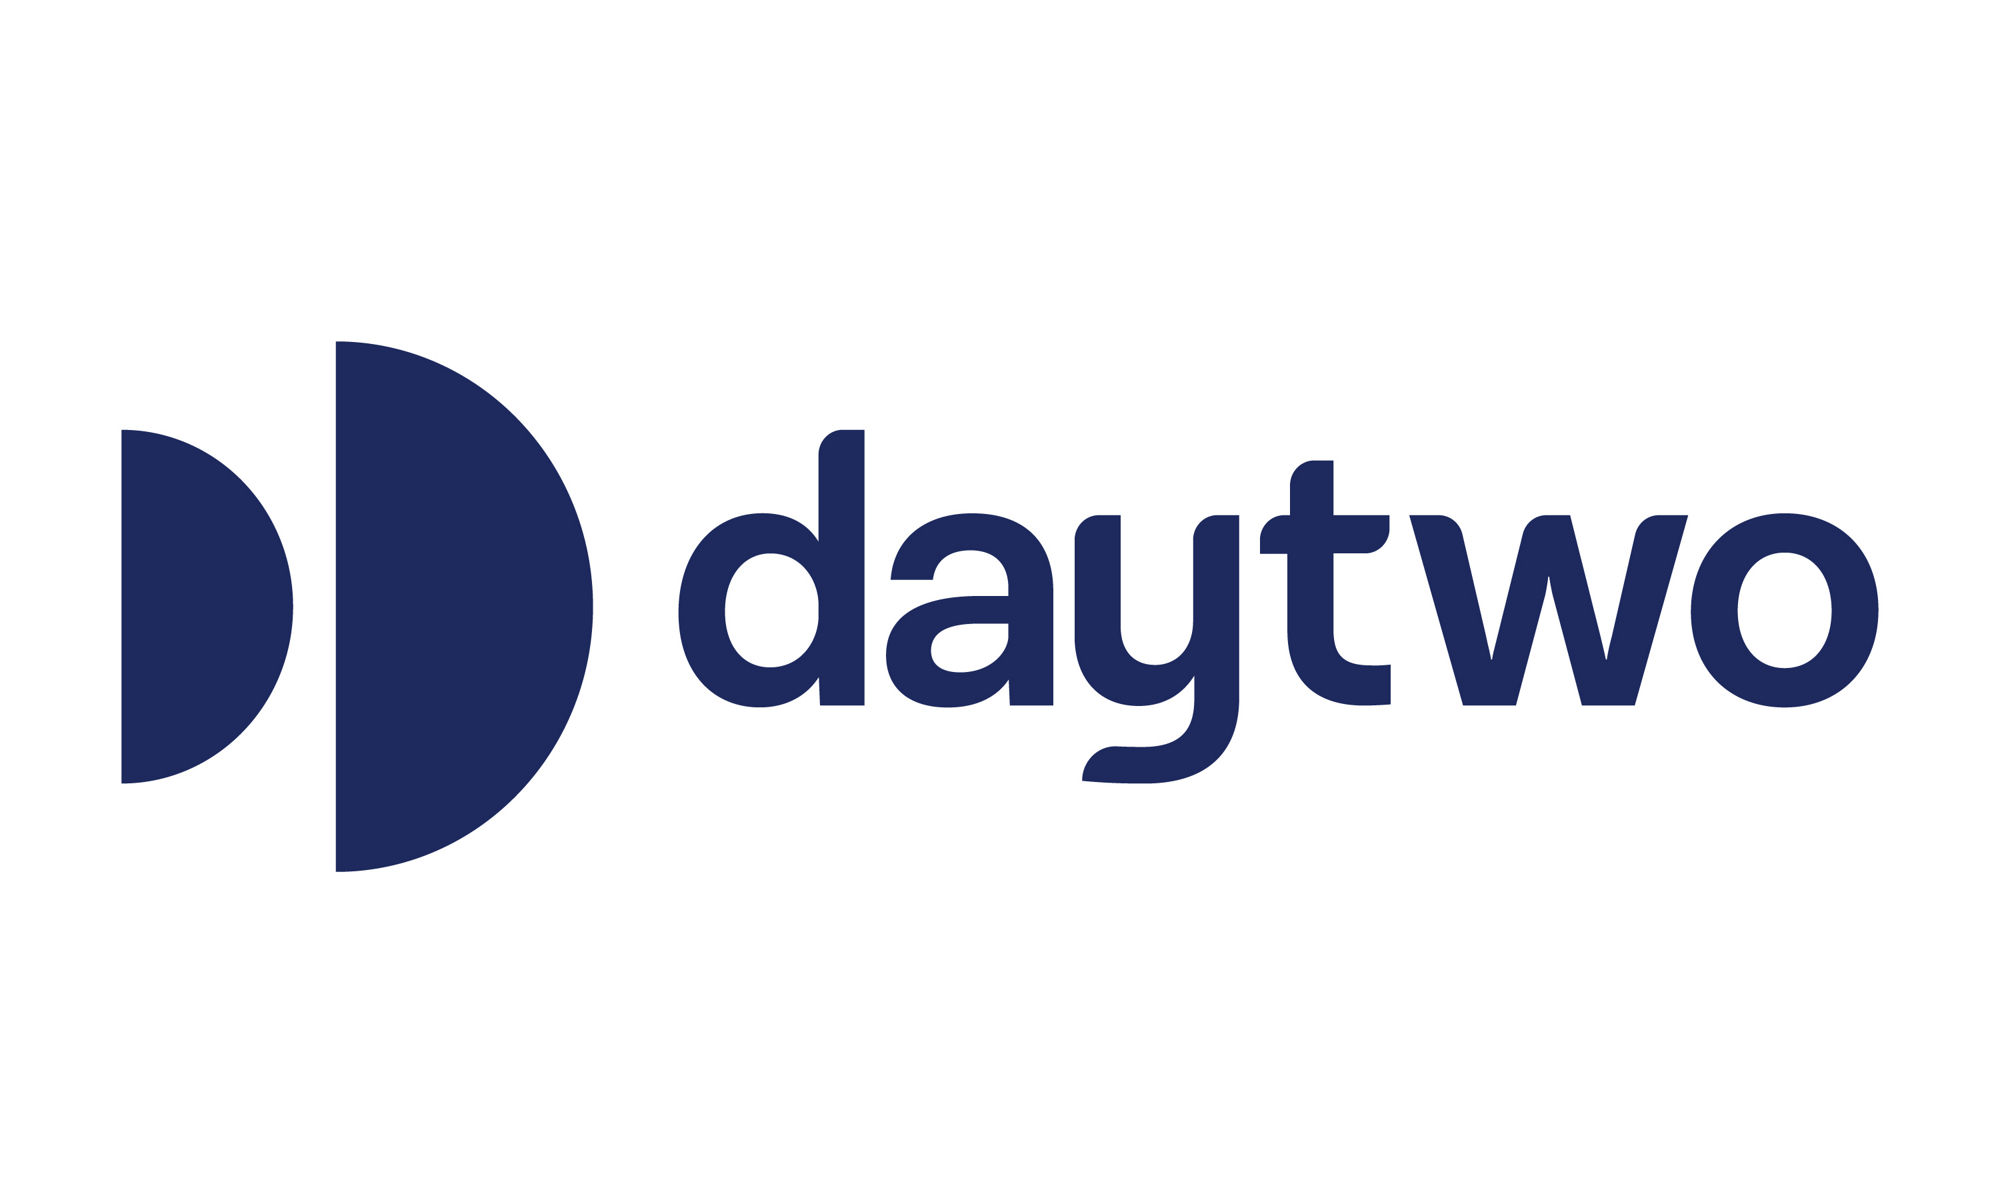 Day Two company logo